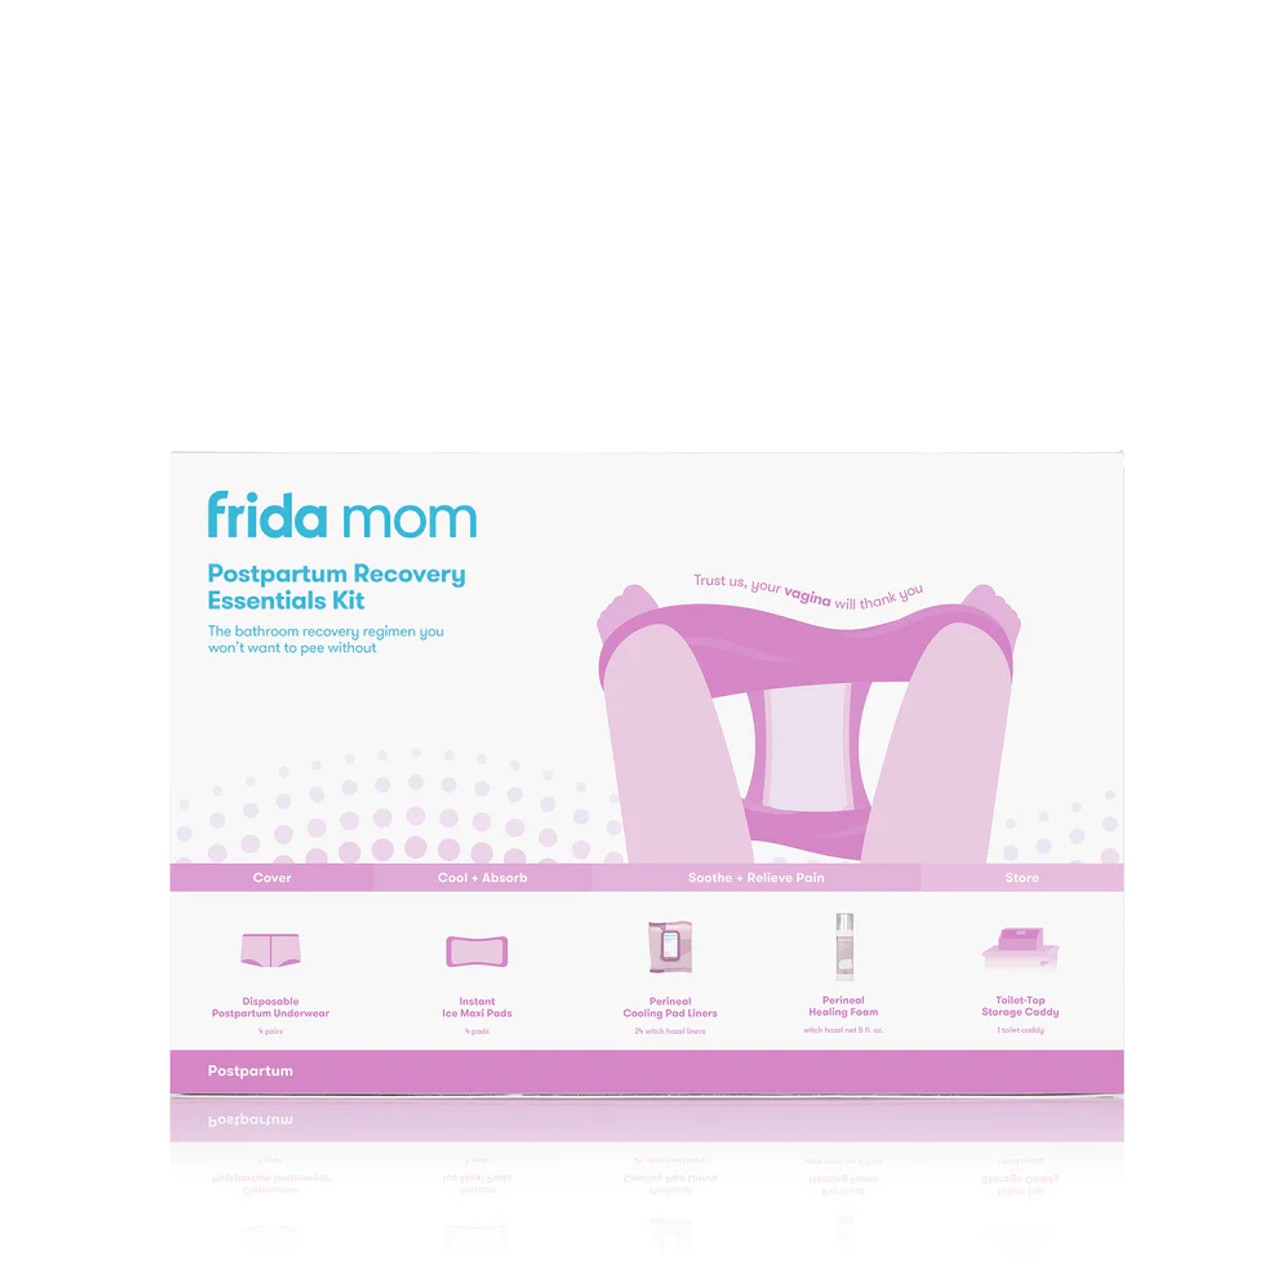 FridaMom Boyshort Disposable Postpartum Underwear